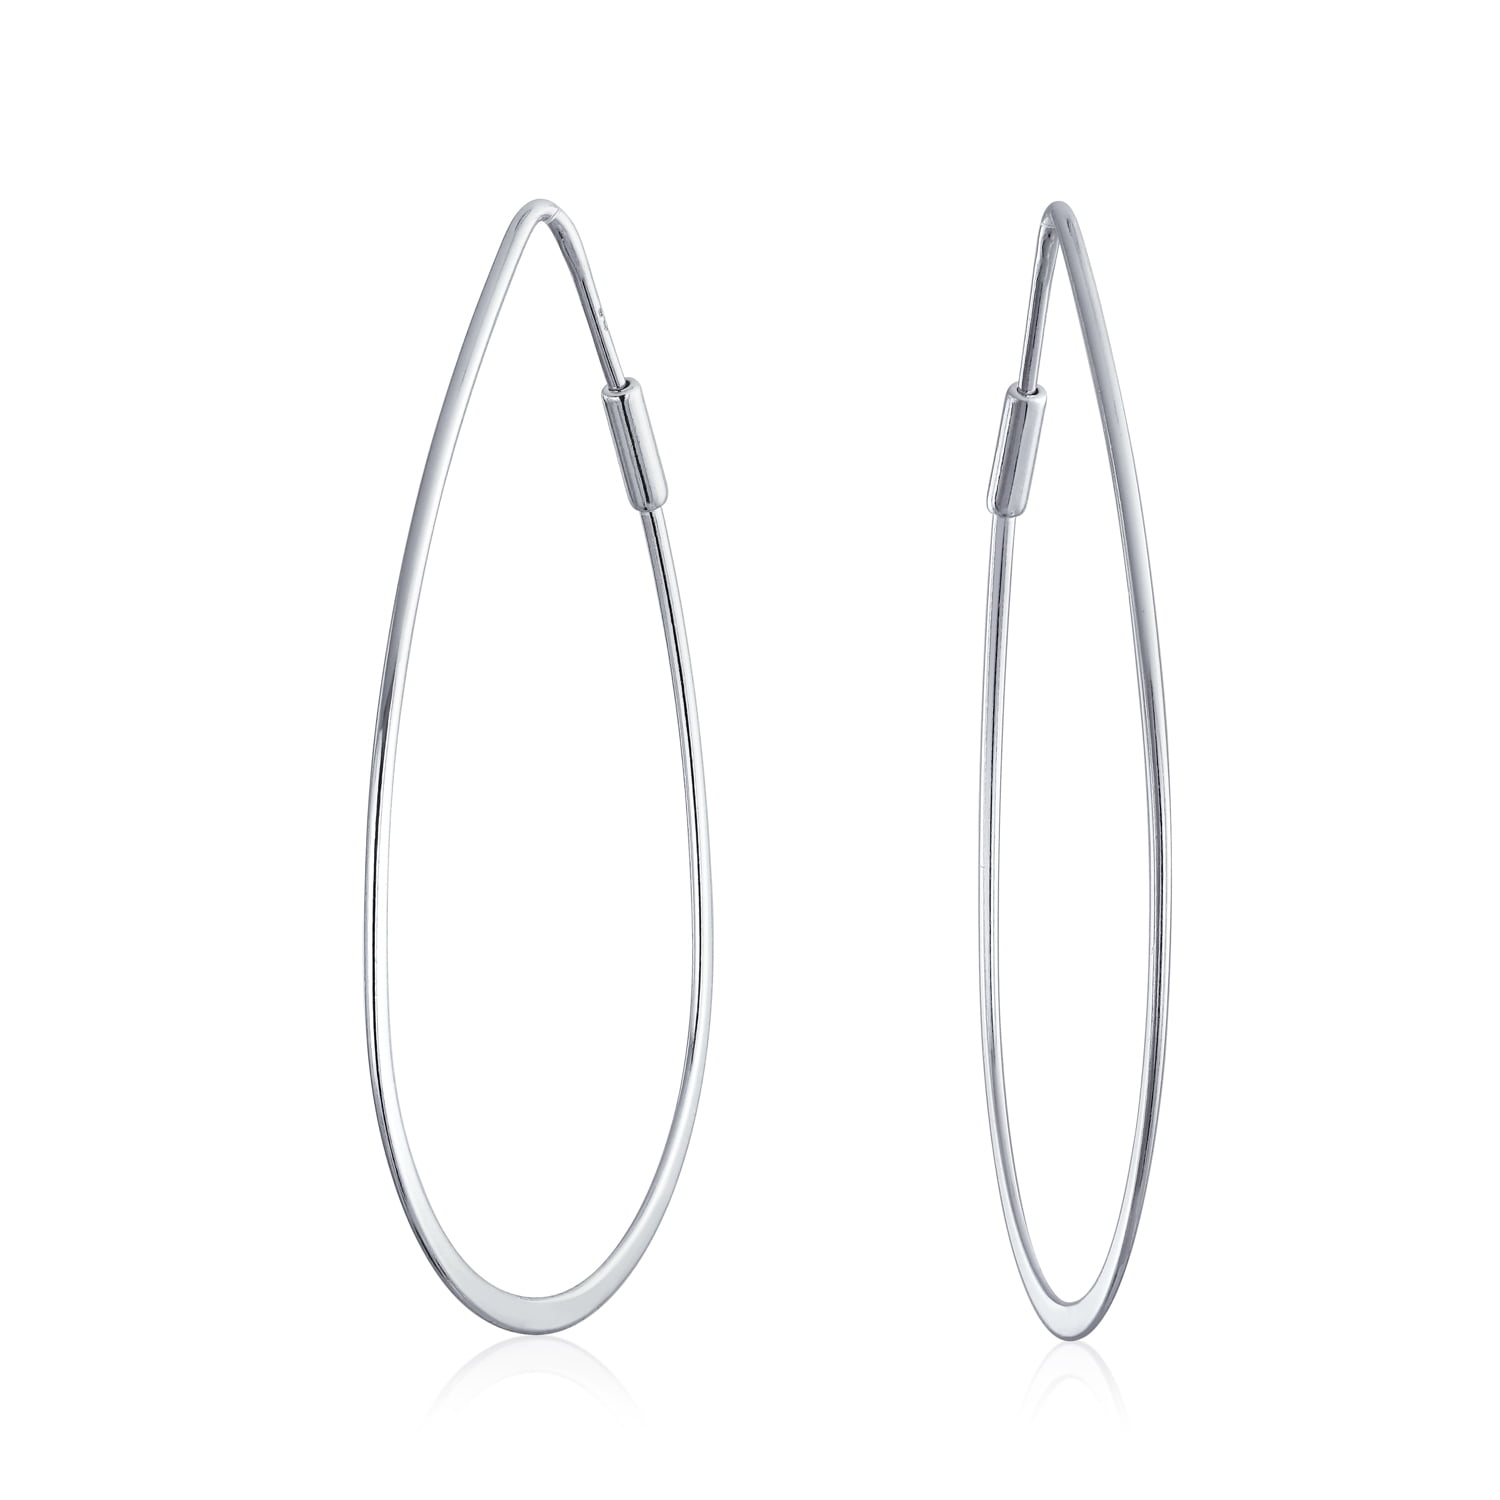 Minimalist Design Earrings Beads Hoop Earrings Simple Design Earrings Light Luxury Style 925 Sterling Silver Earrings